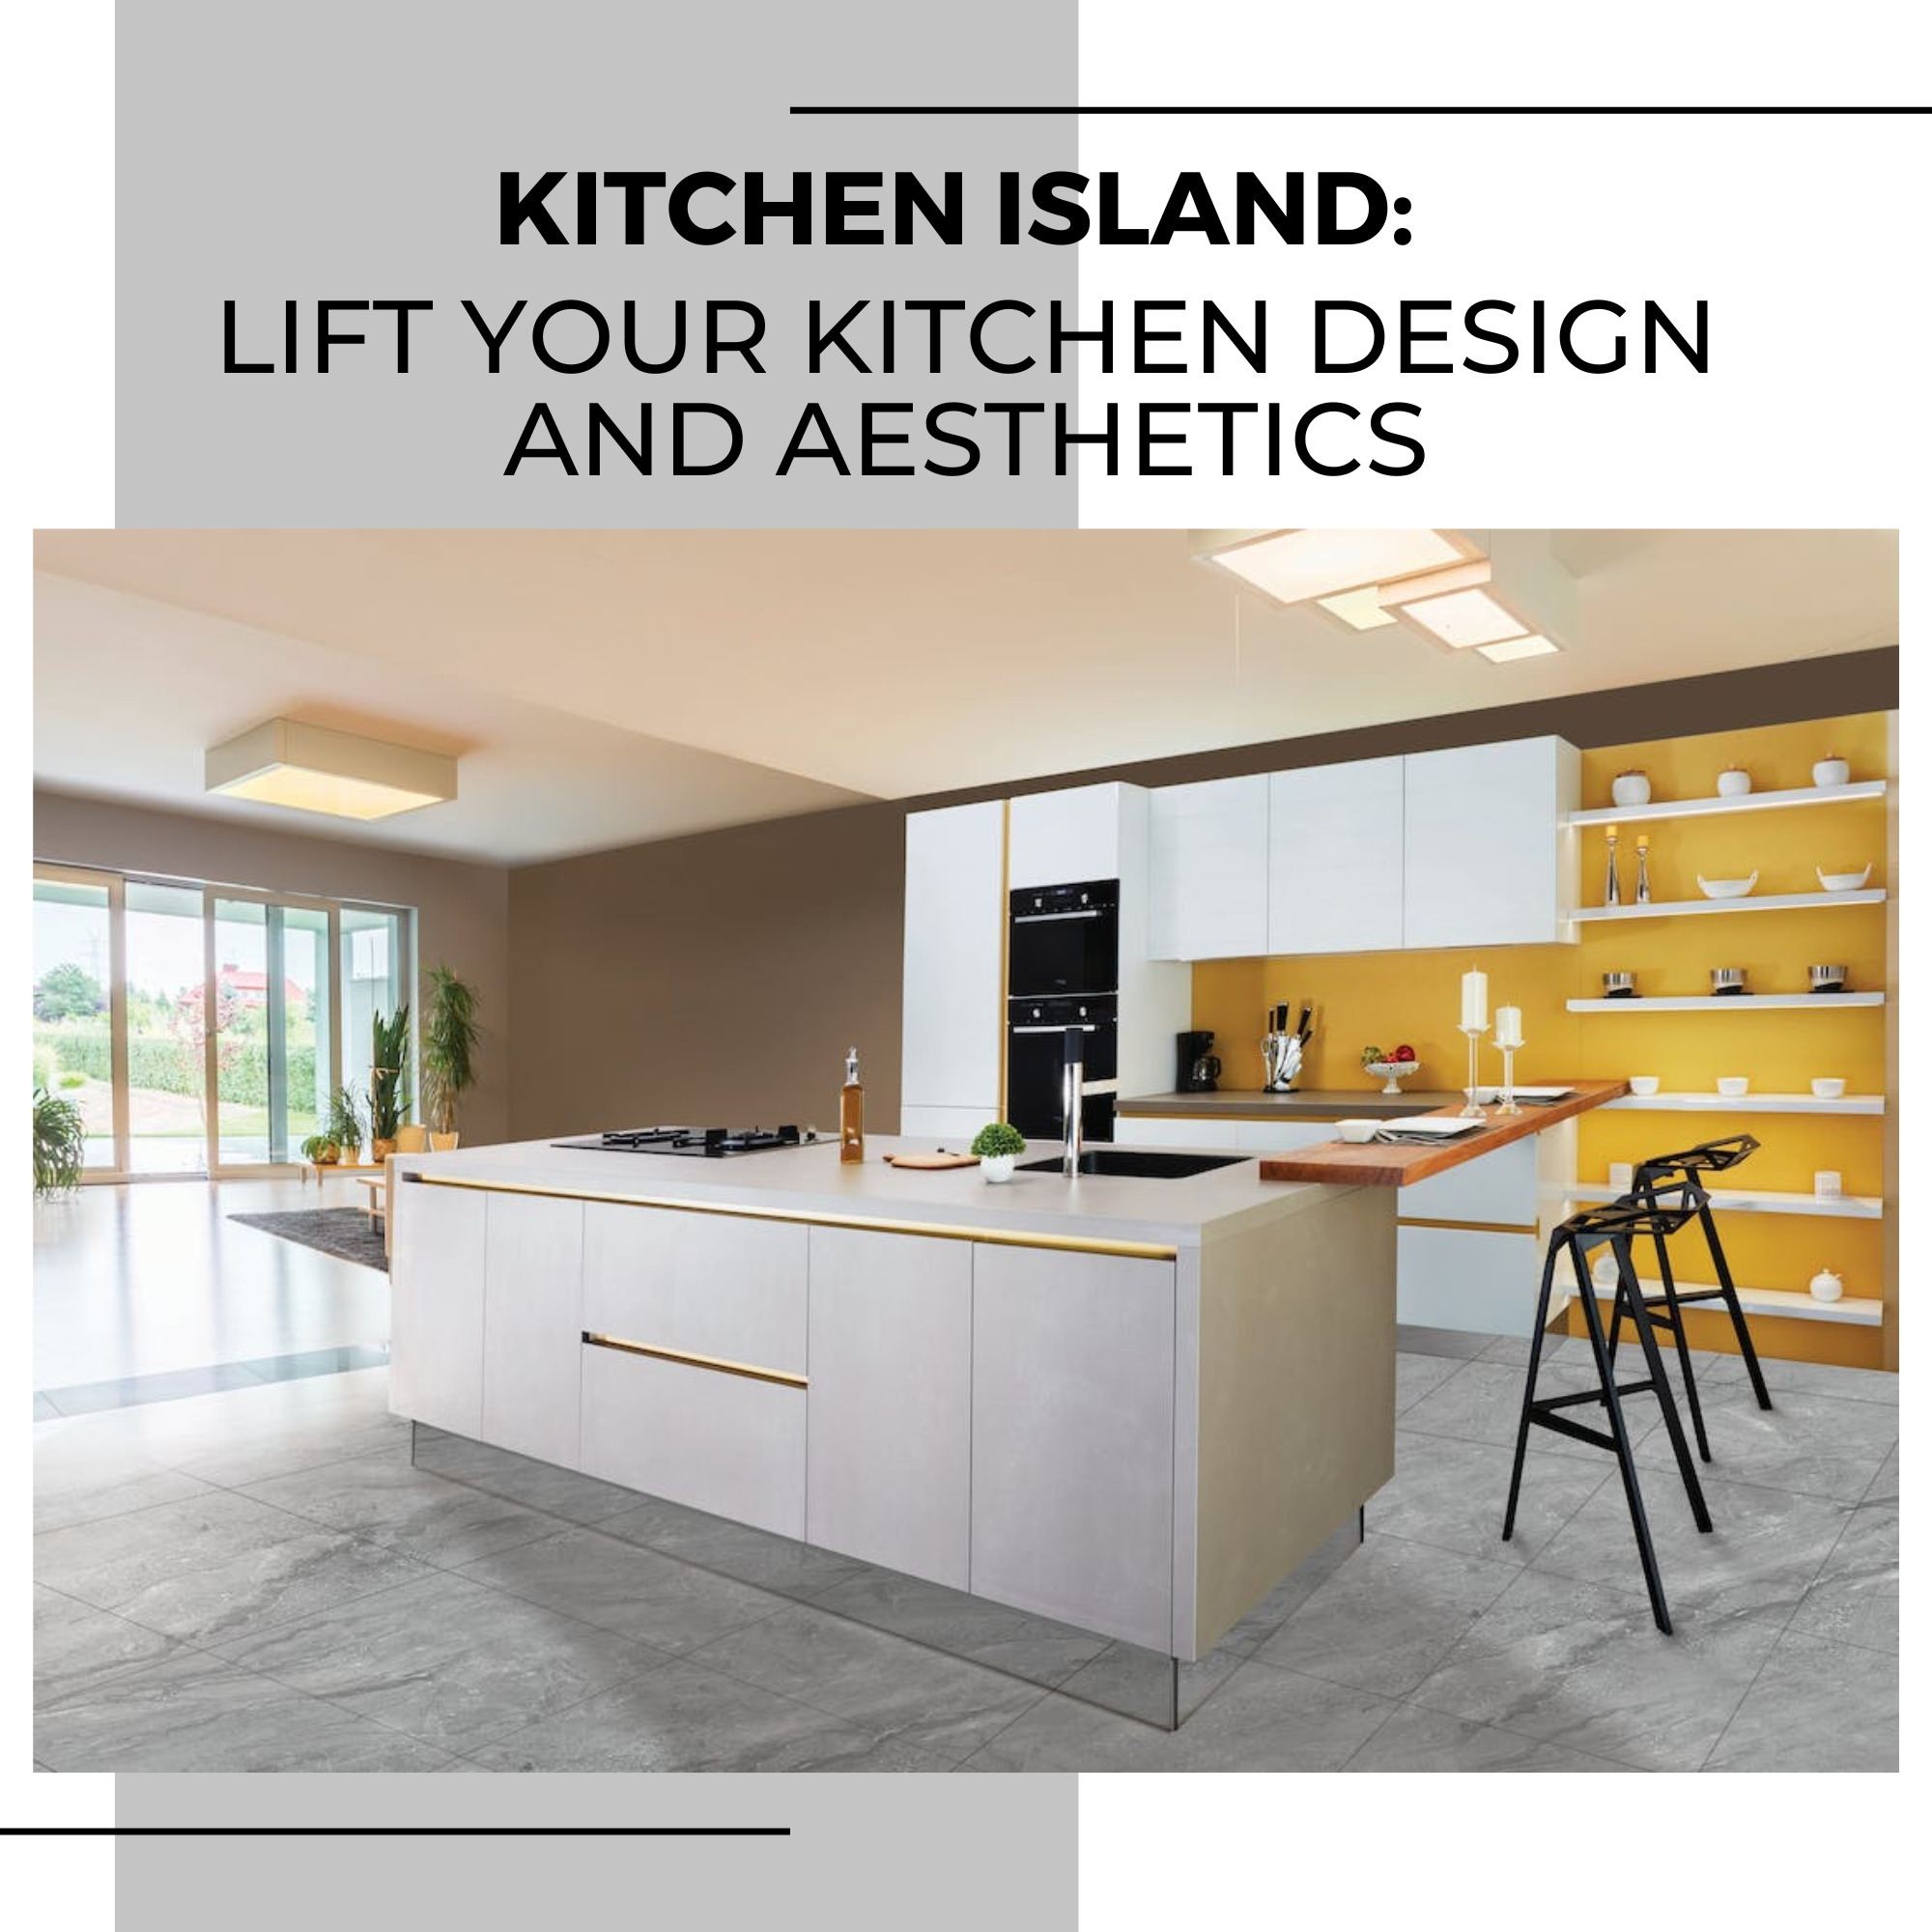 Kitchen Island: Lift your kitchen design and aesthetics